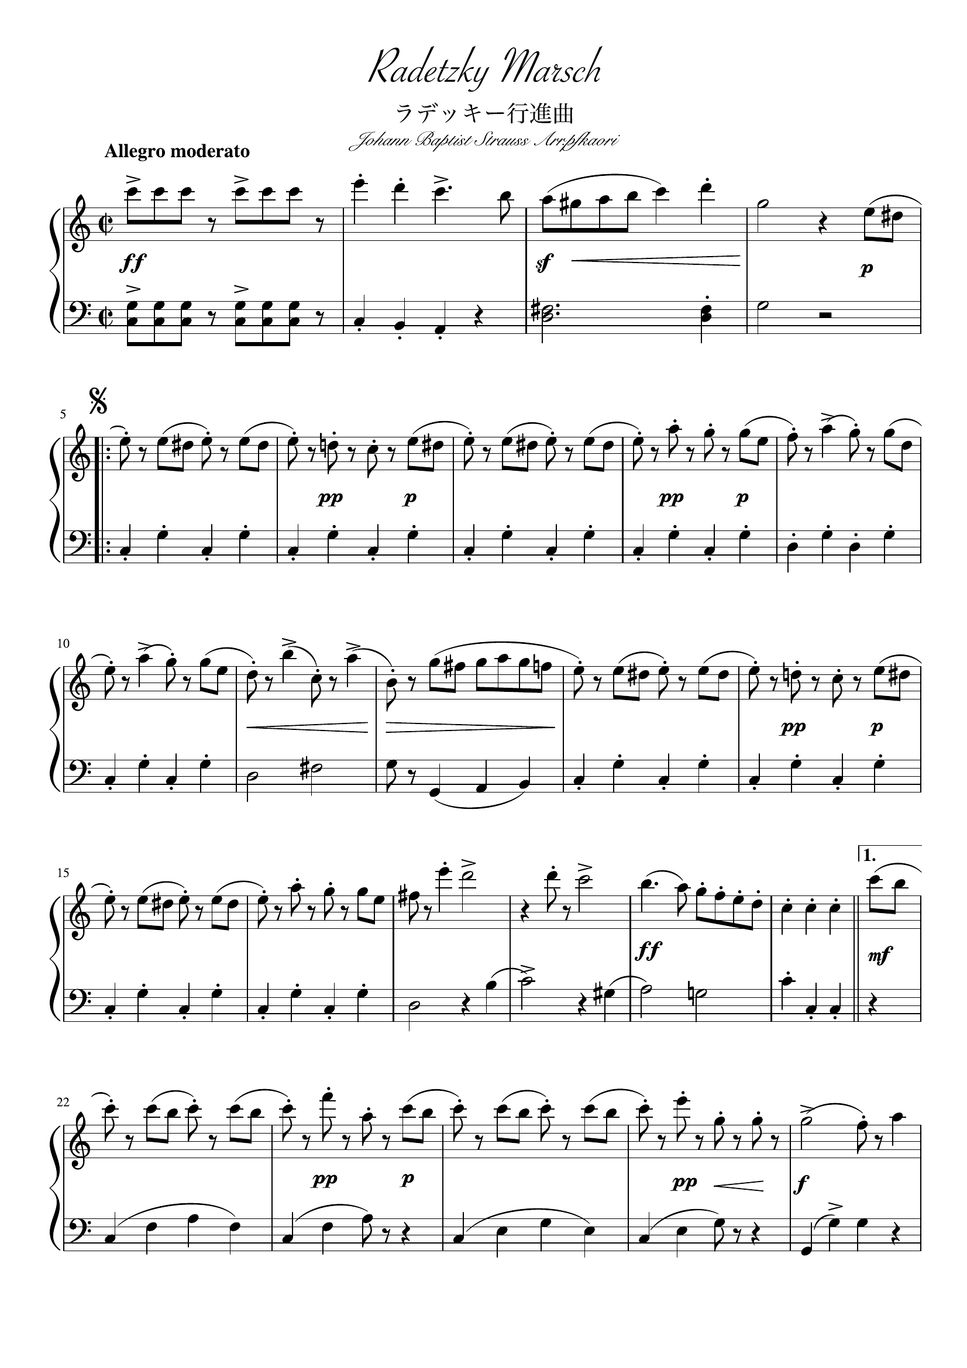 Johann Strauss - Radetzky Marsch (full pianoslo Beginner) by pfkaori